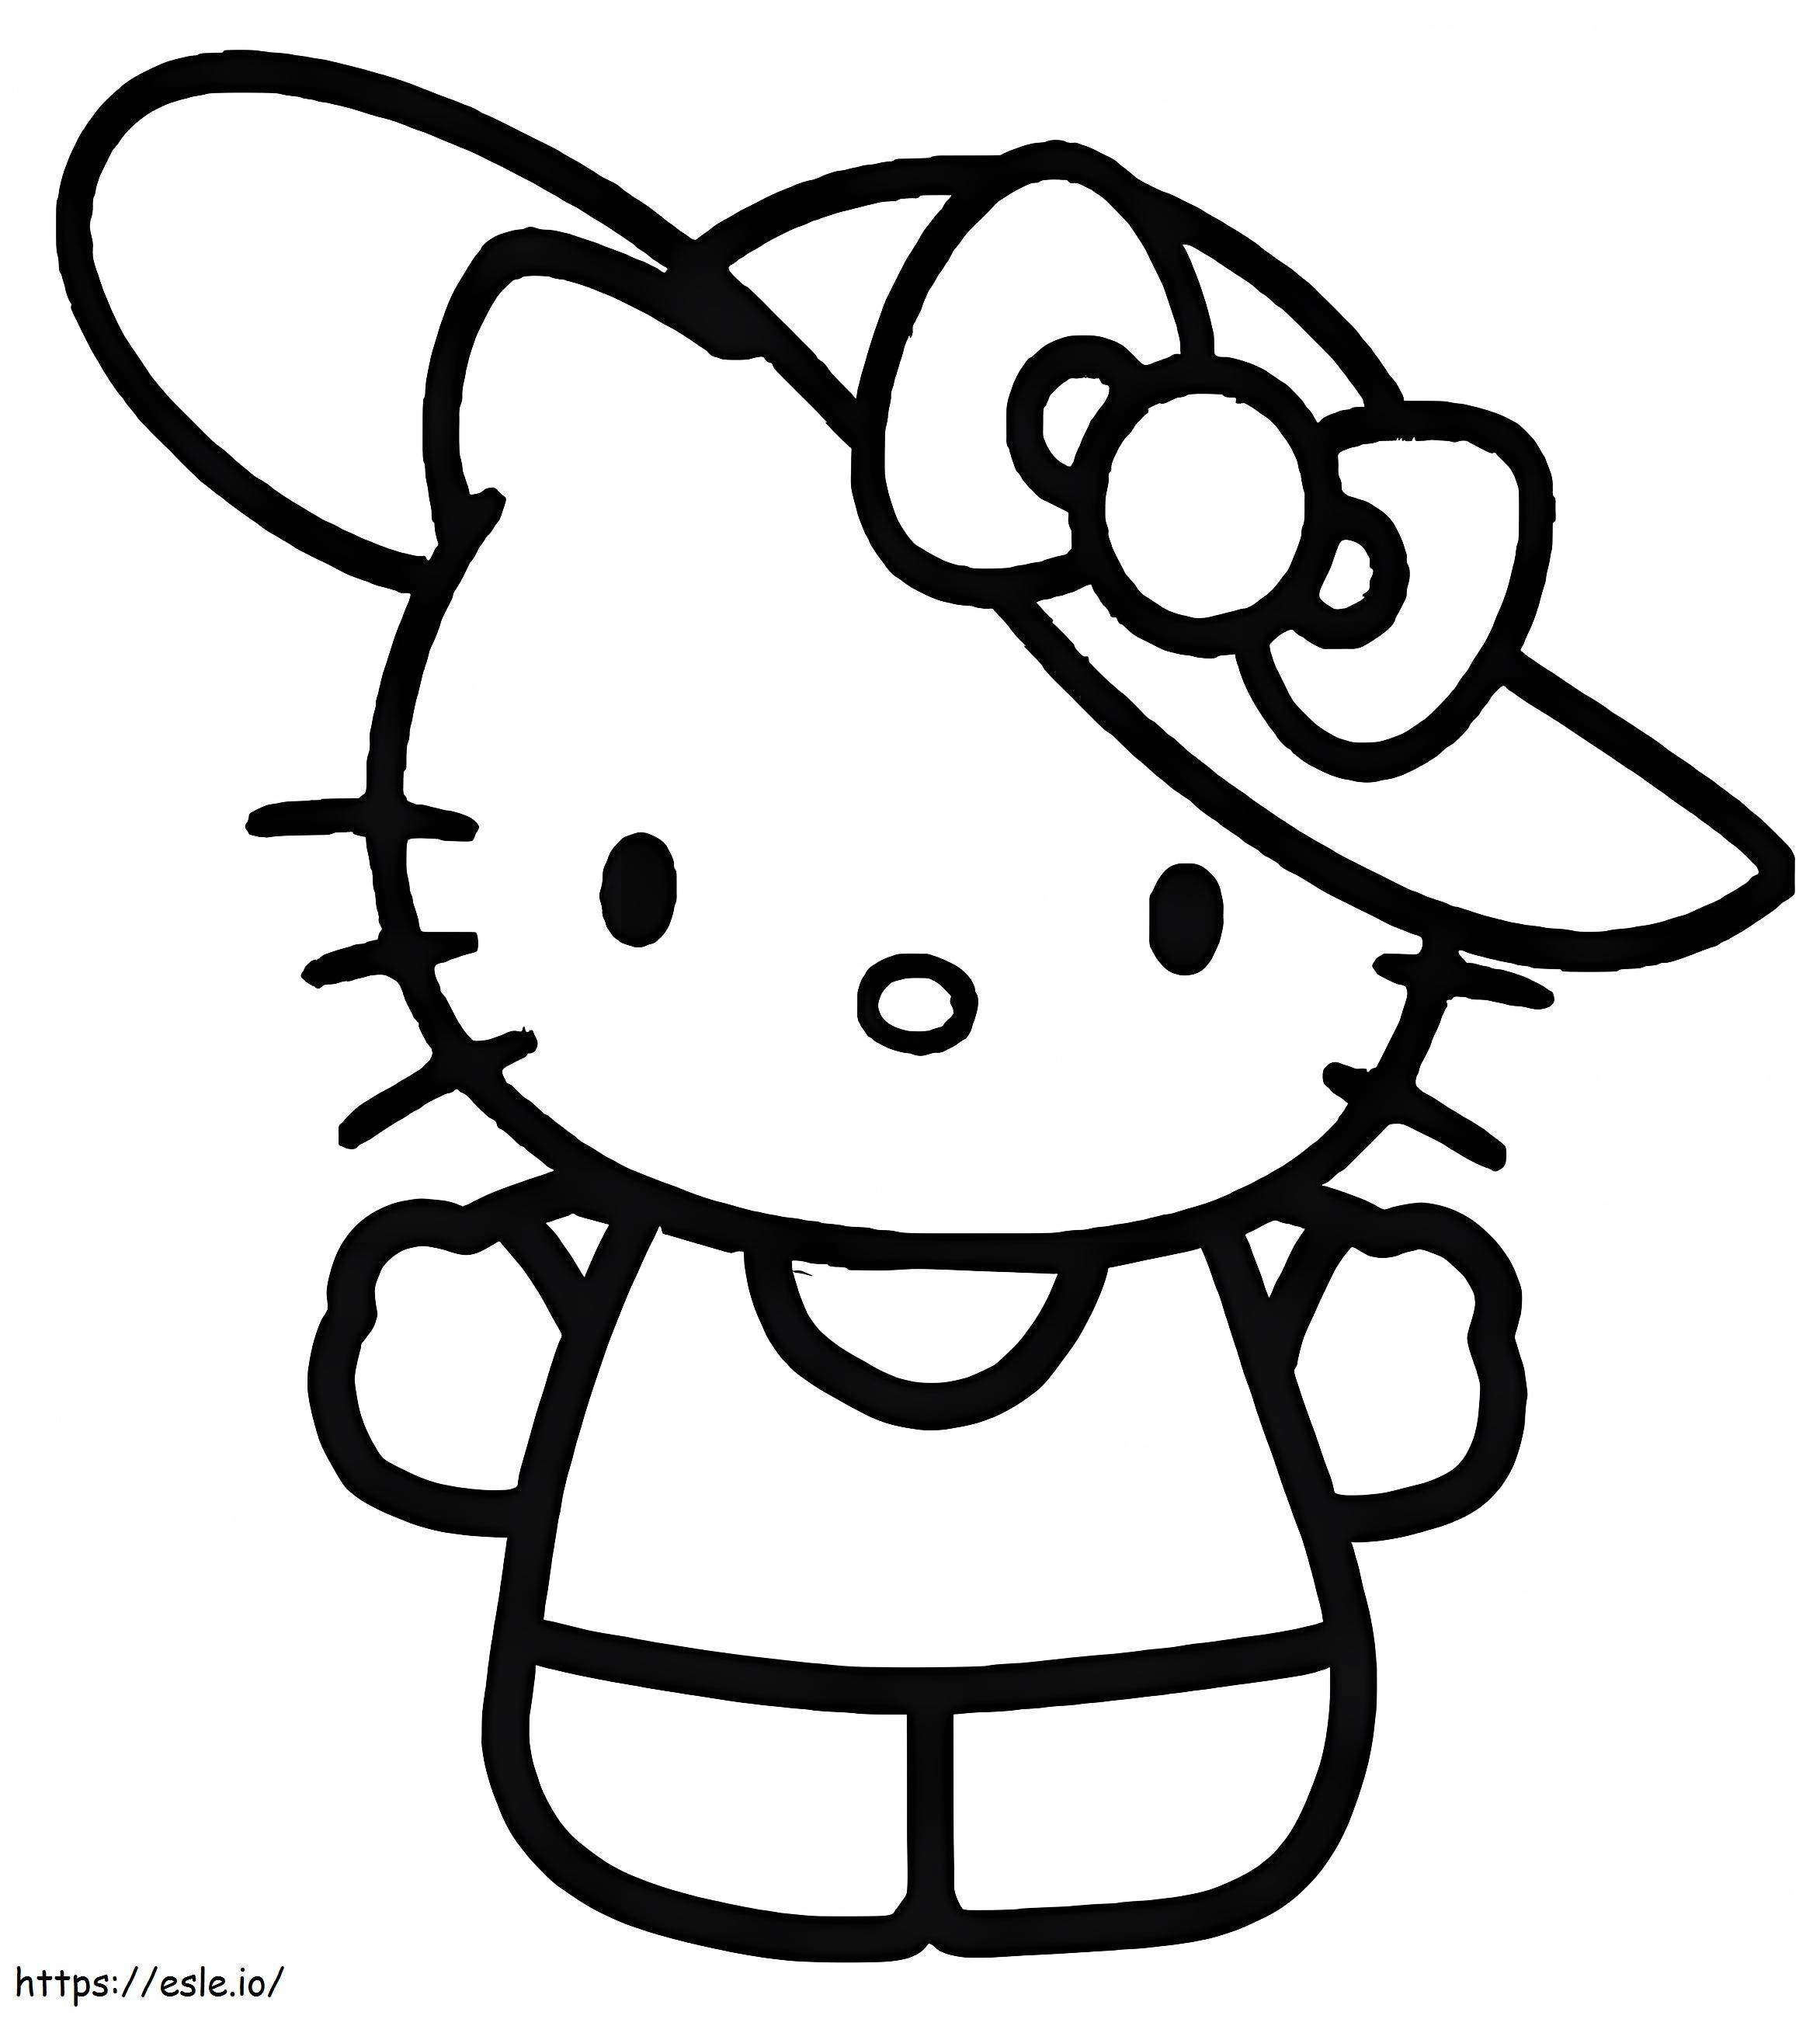 Şapkalı Hello Kitty boyama